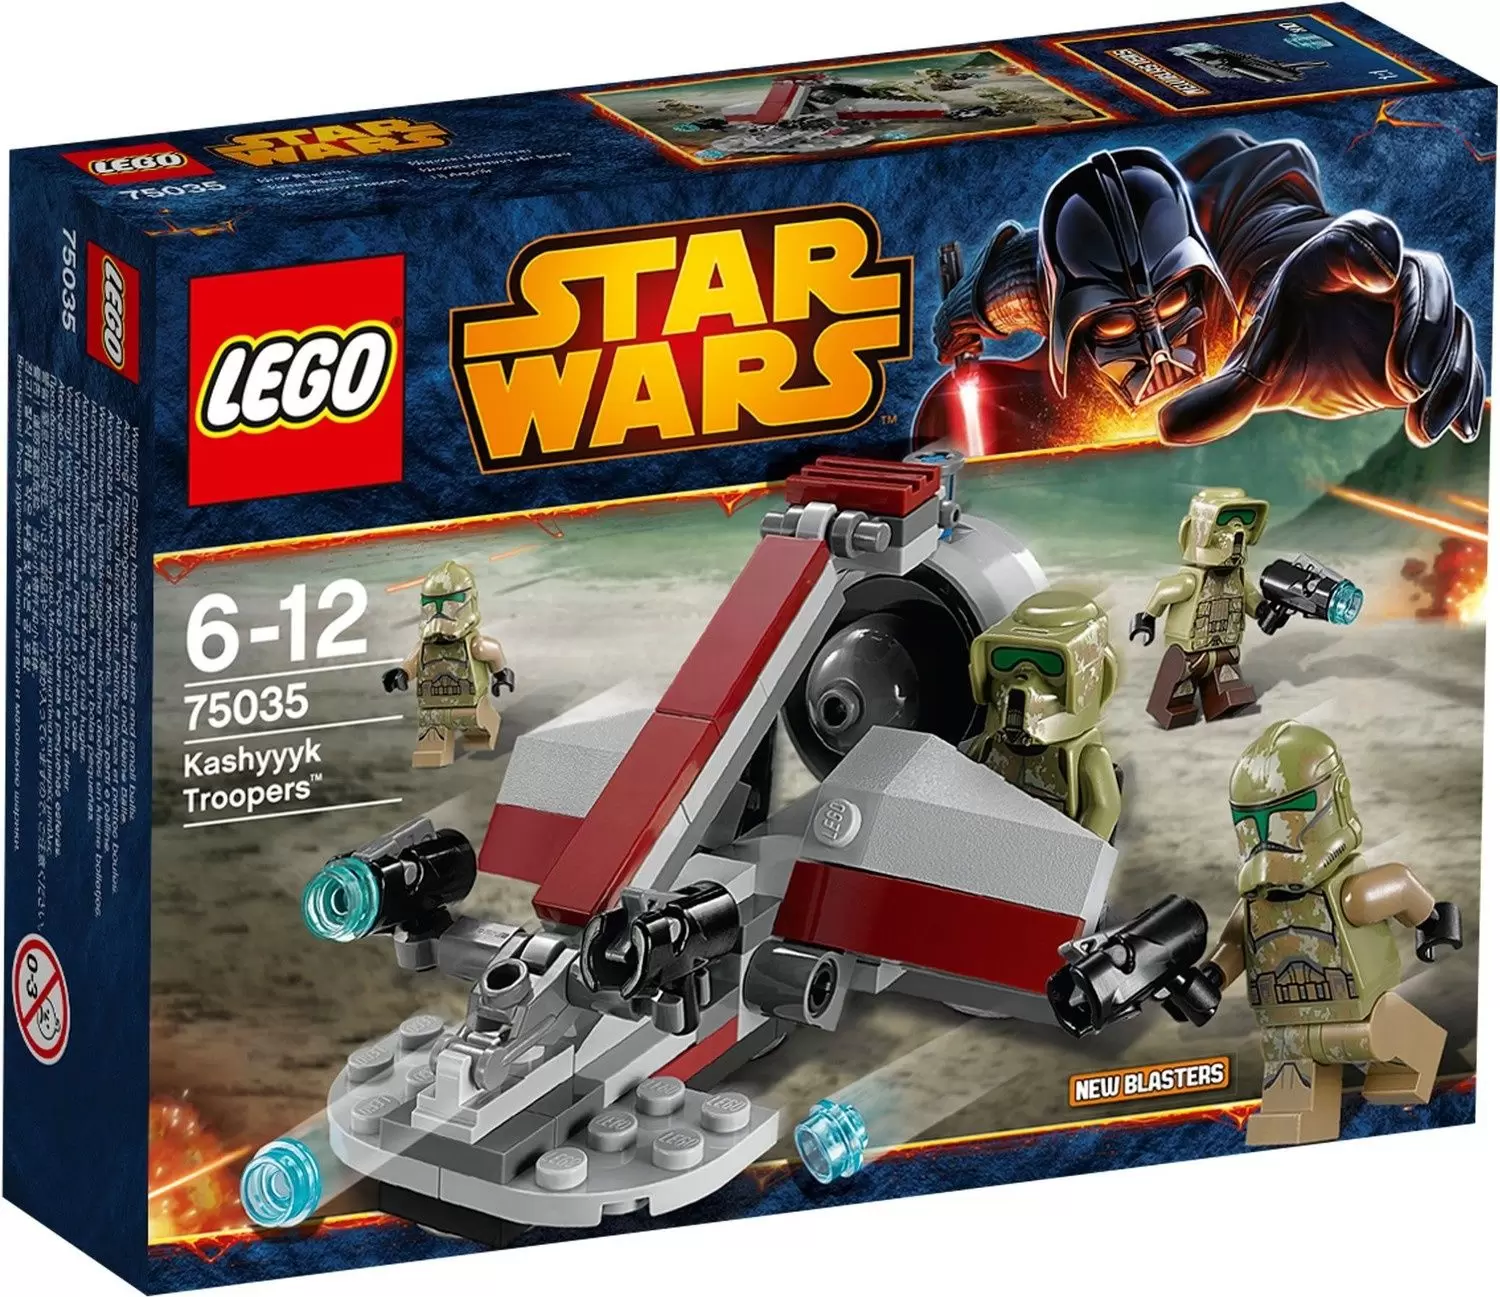 LEGO Star Wars - Kashyyyk Troopers